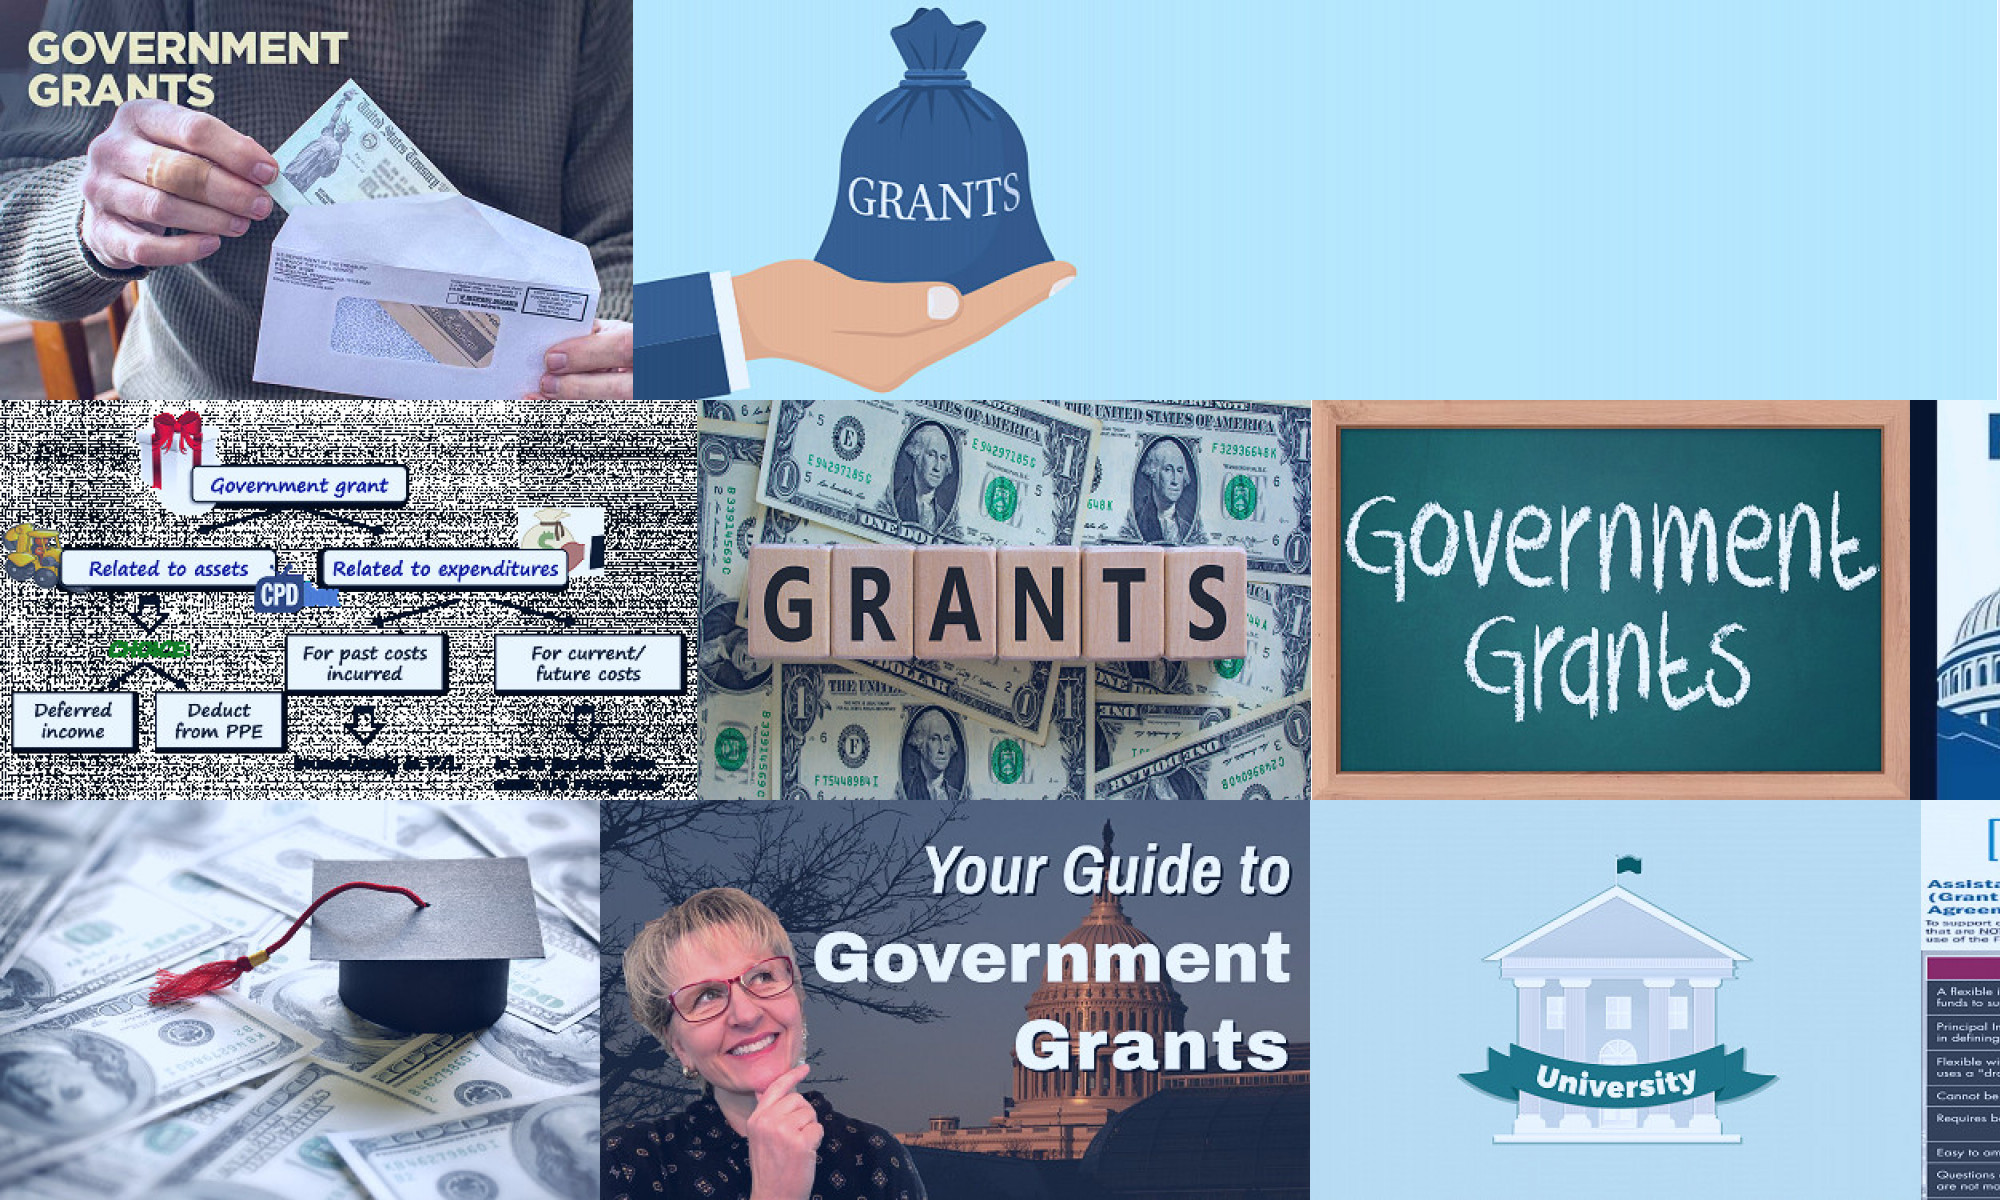 government grants